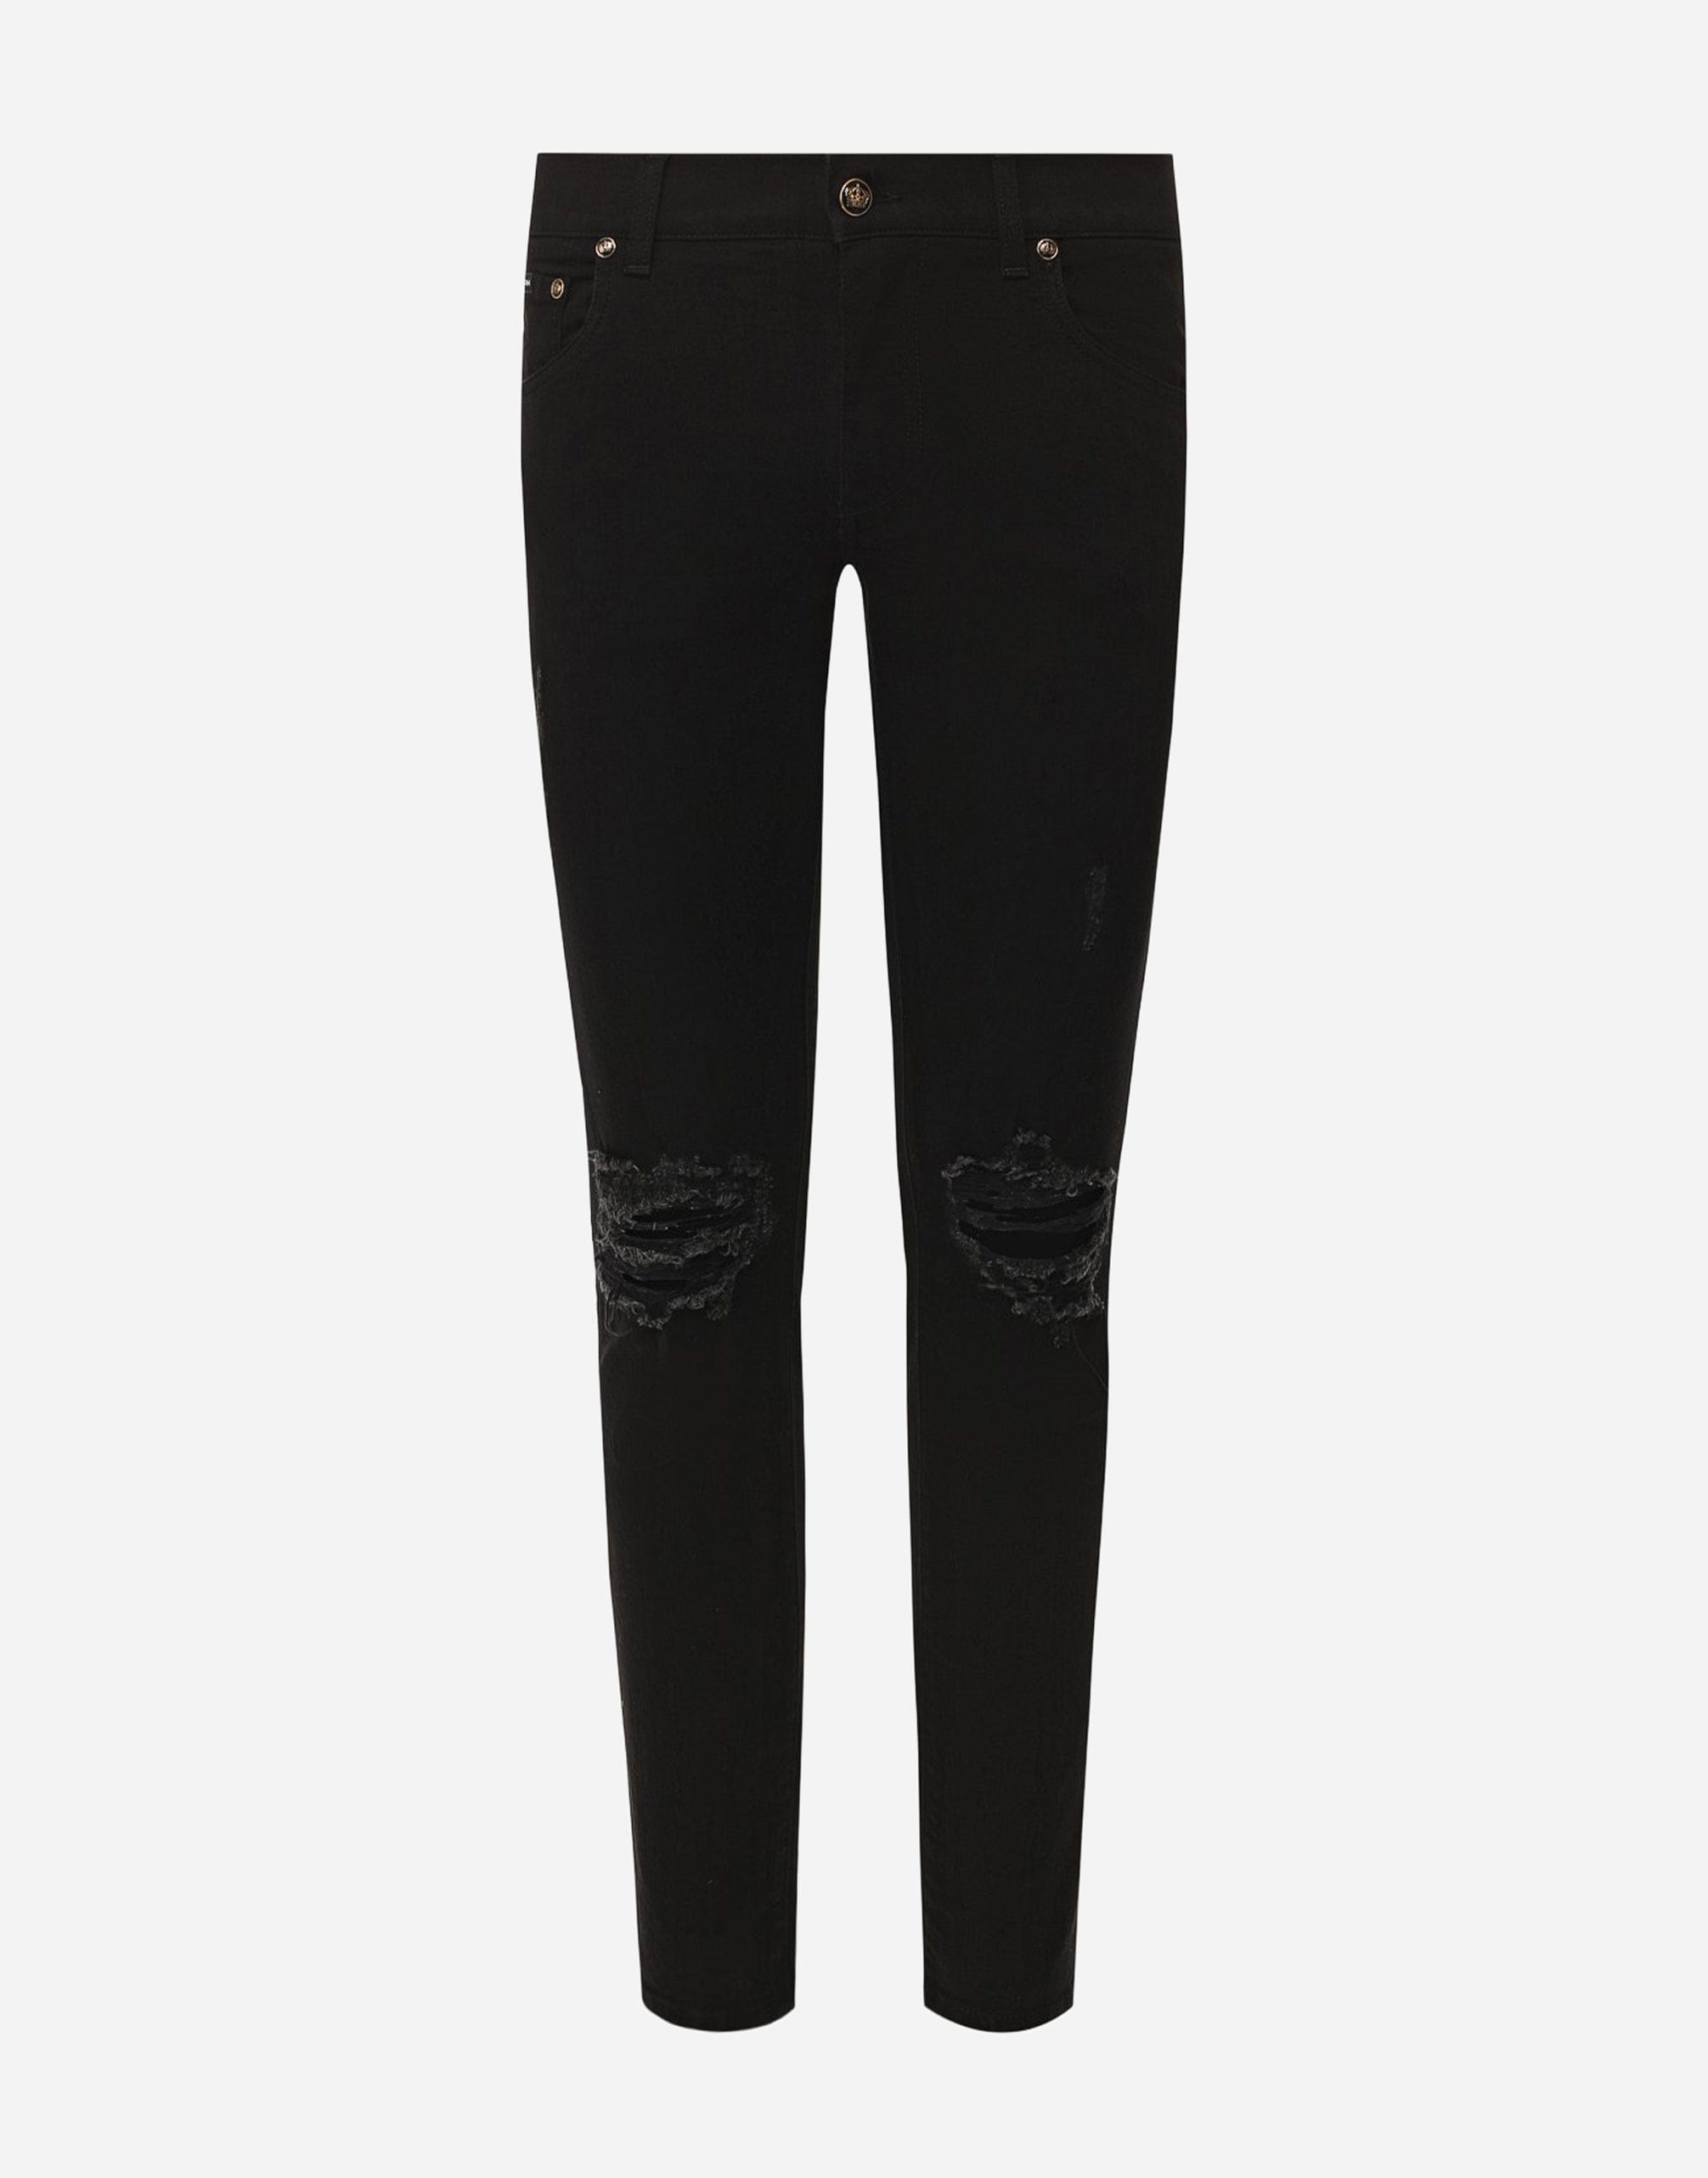 Dolce & Gabbana Distressed Skinny Fit Jeans